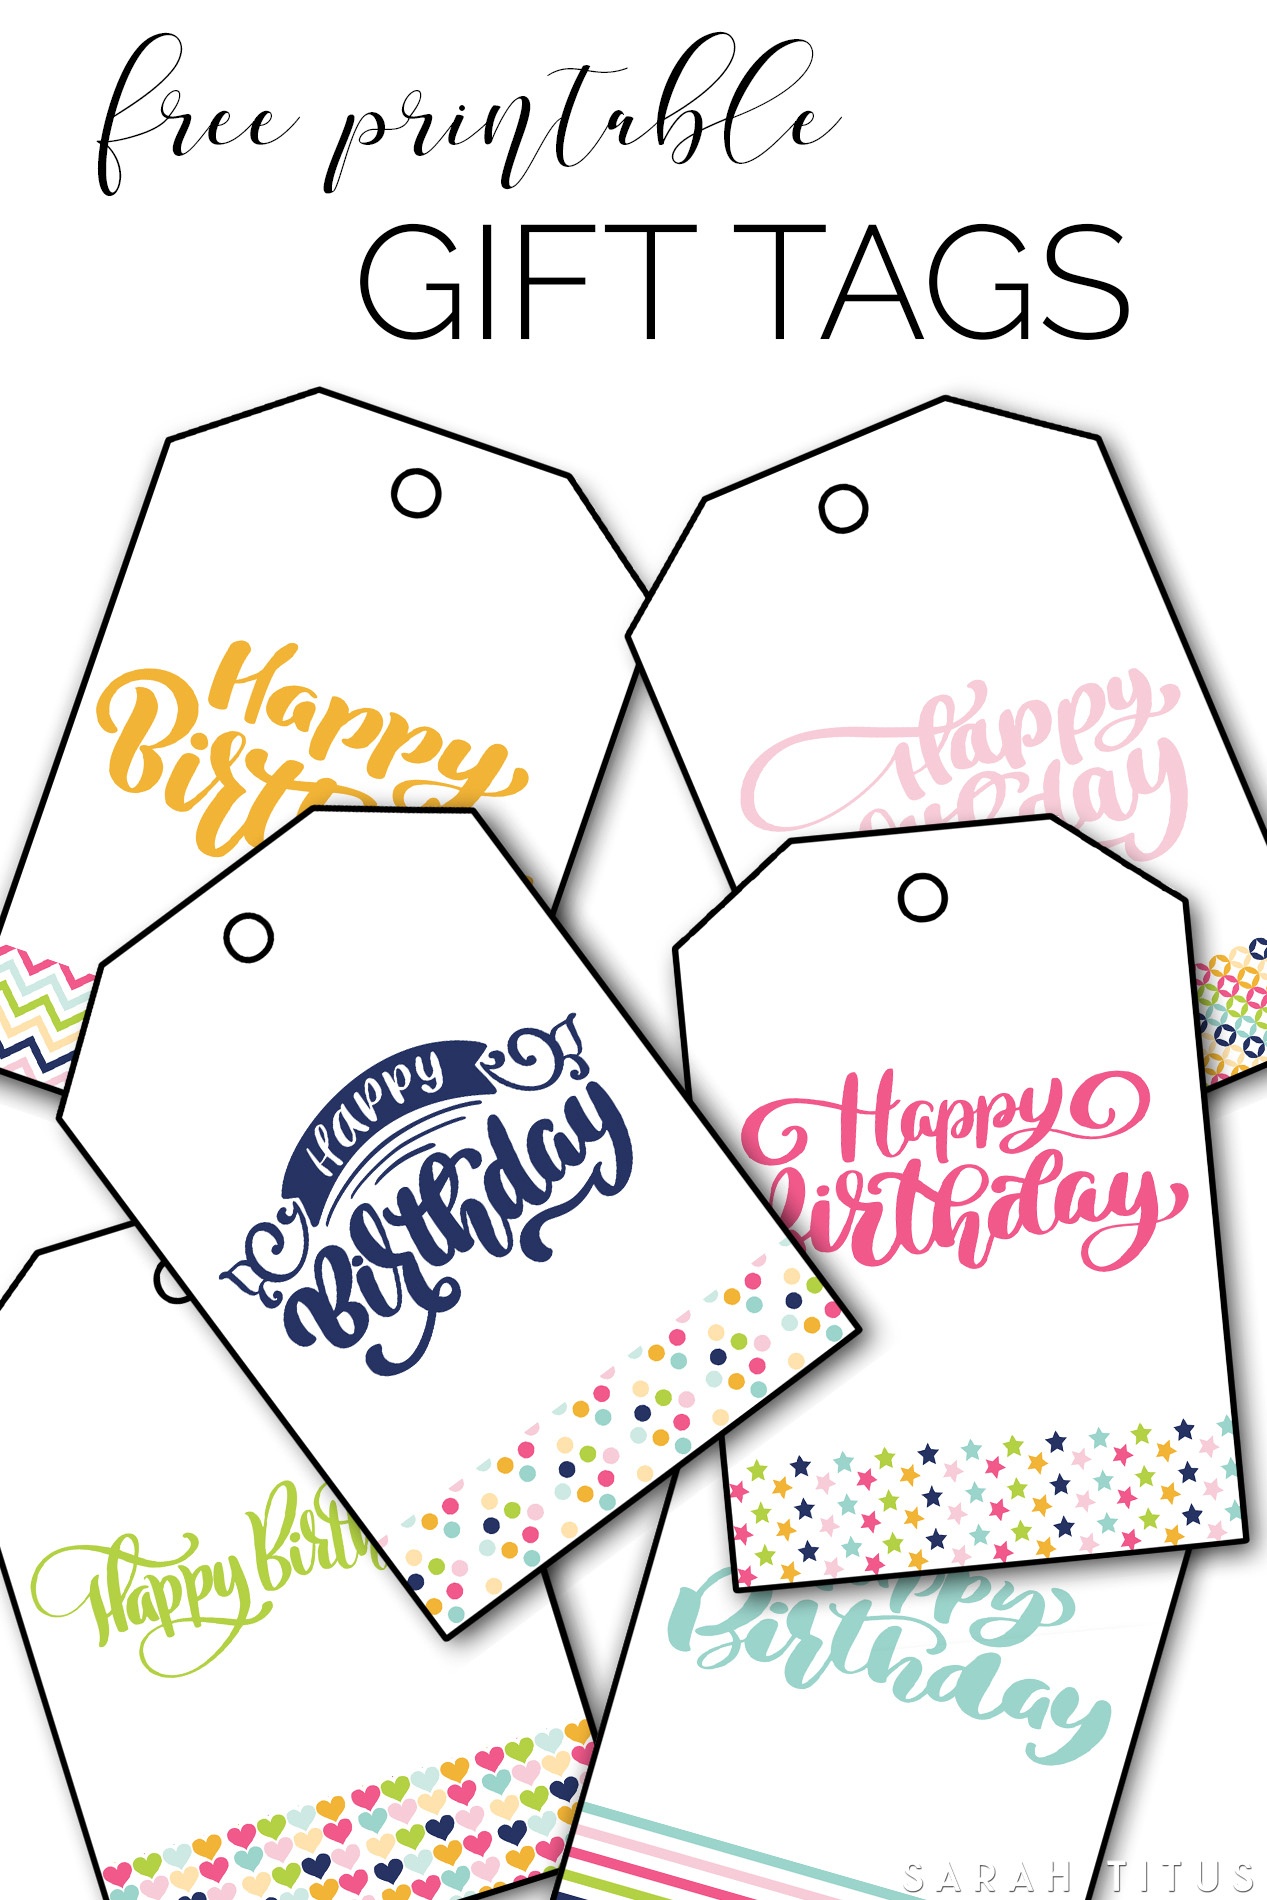 Free Printable Happy Birthday Gift Tags - Sarah Titus - Free Printable Gift Tags